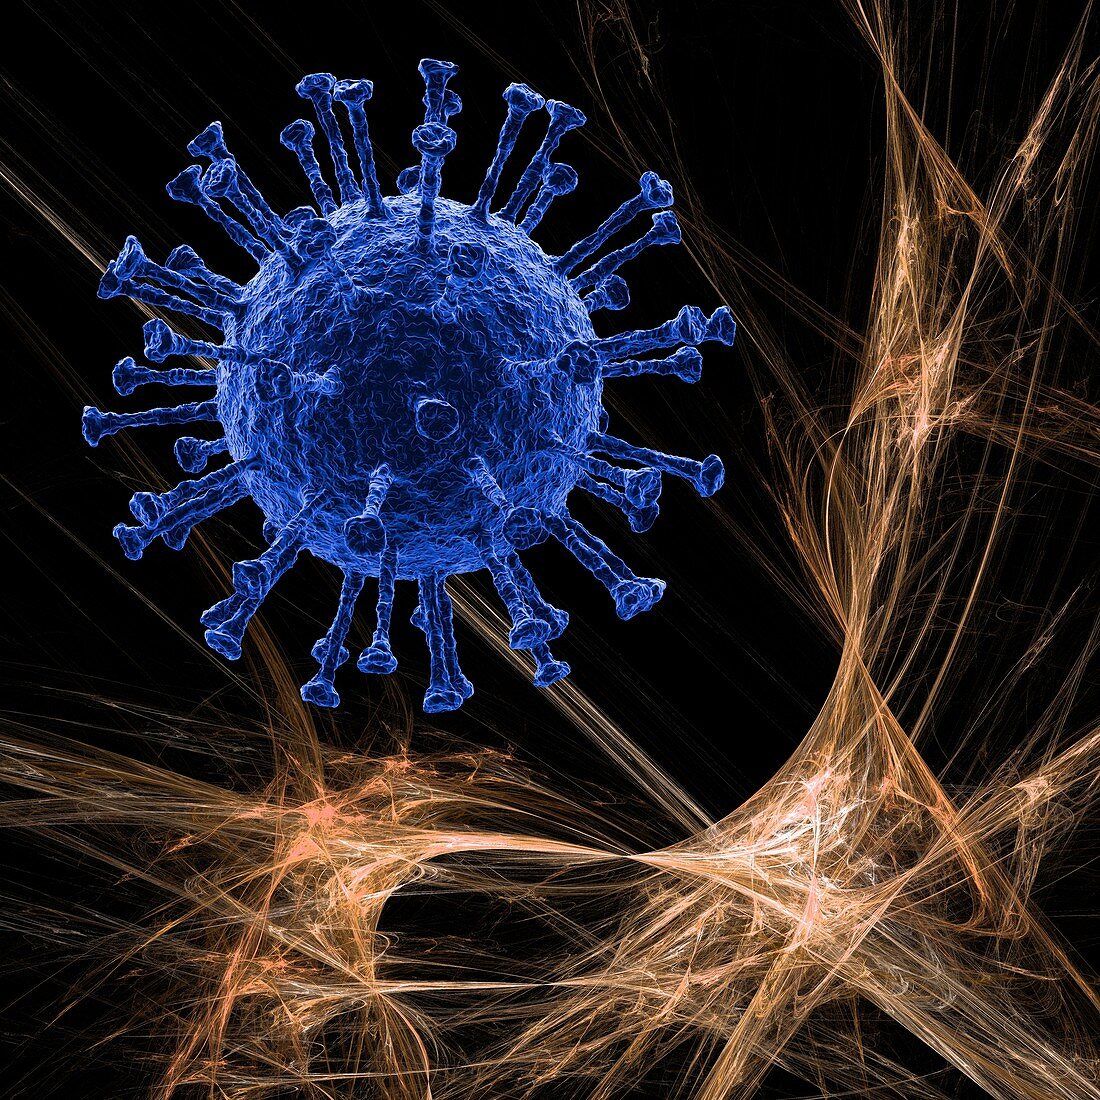 Virus capsid, conceptual illustration